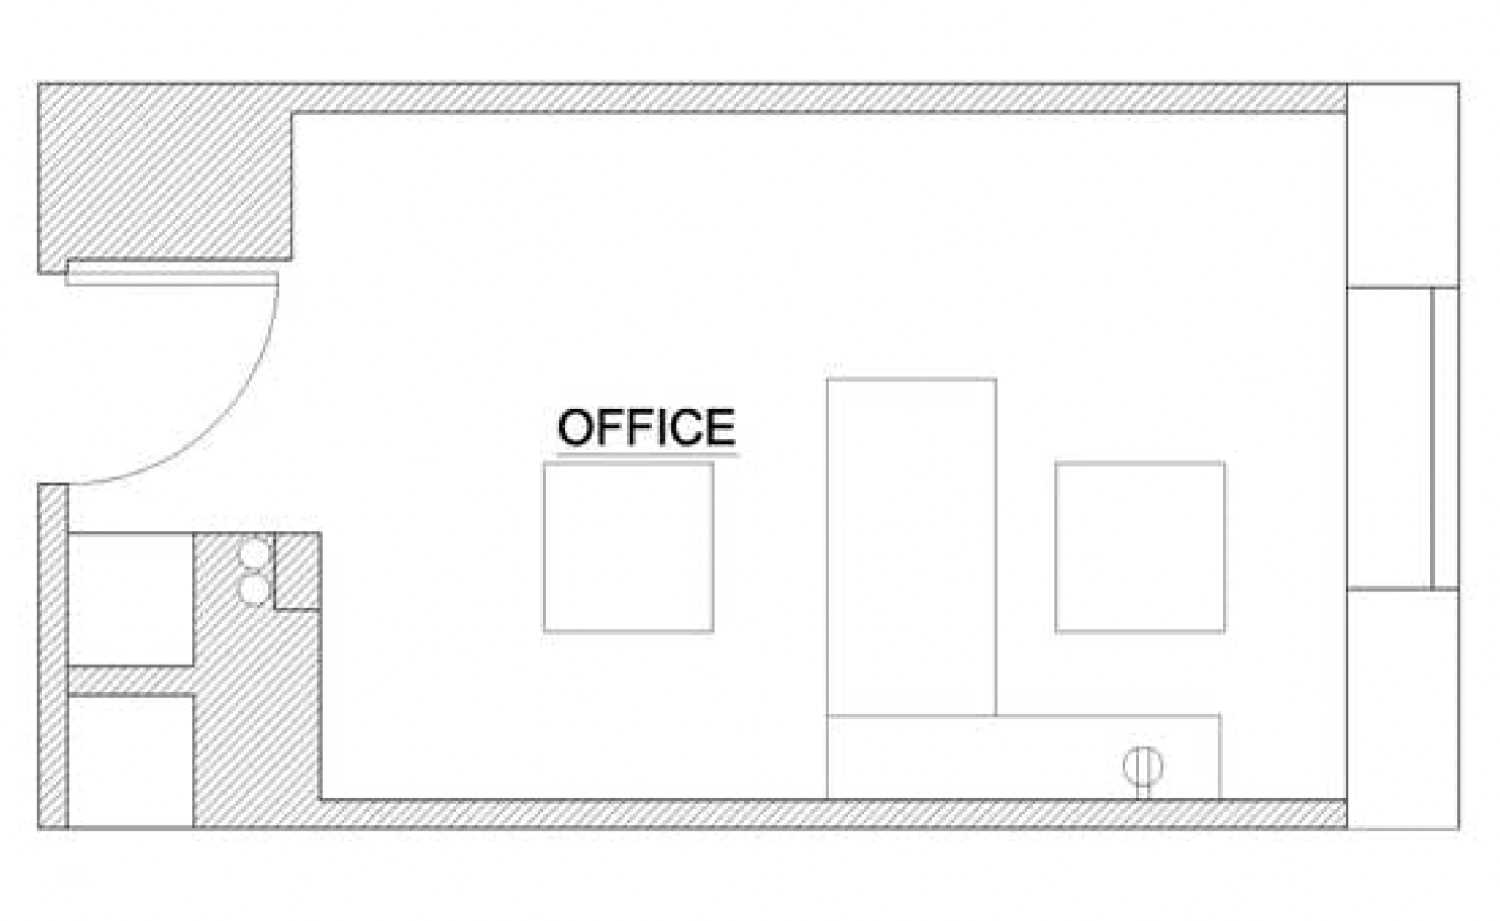 Floorplan for 156 West 86th Street, OFFICE